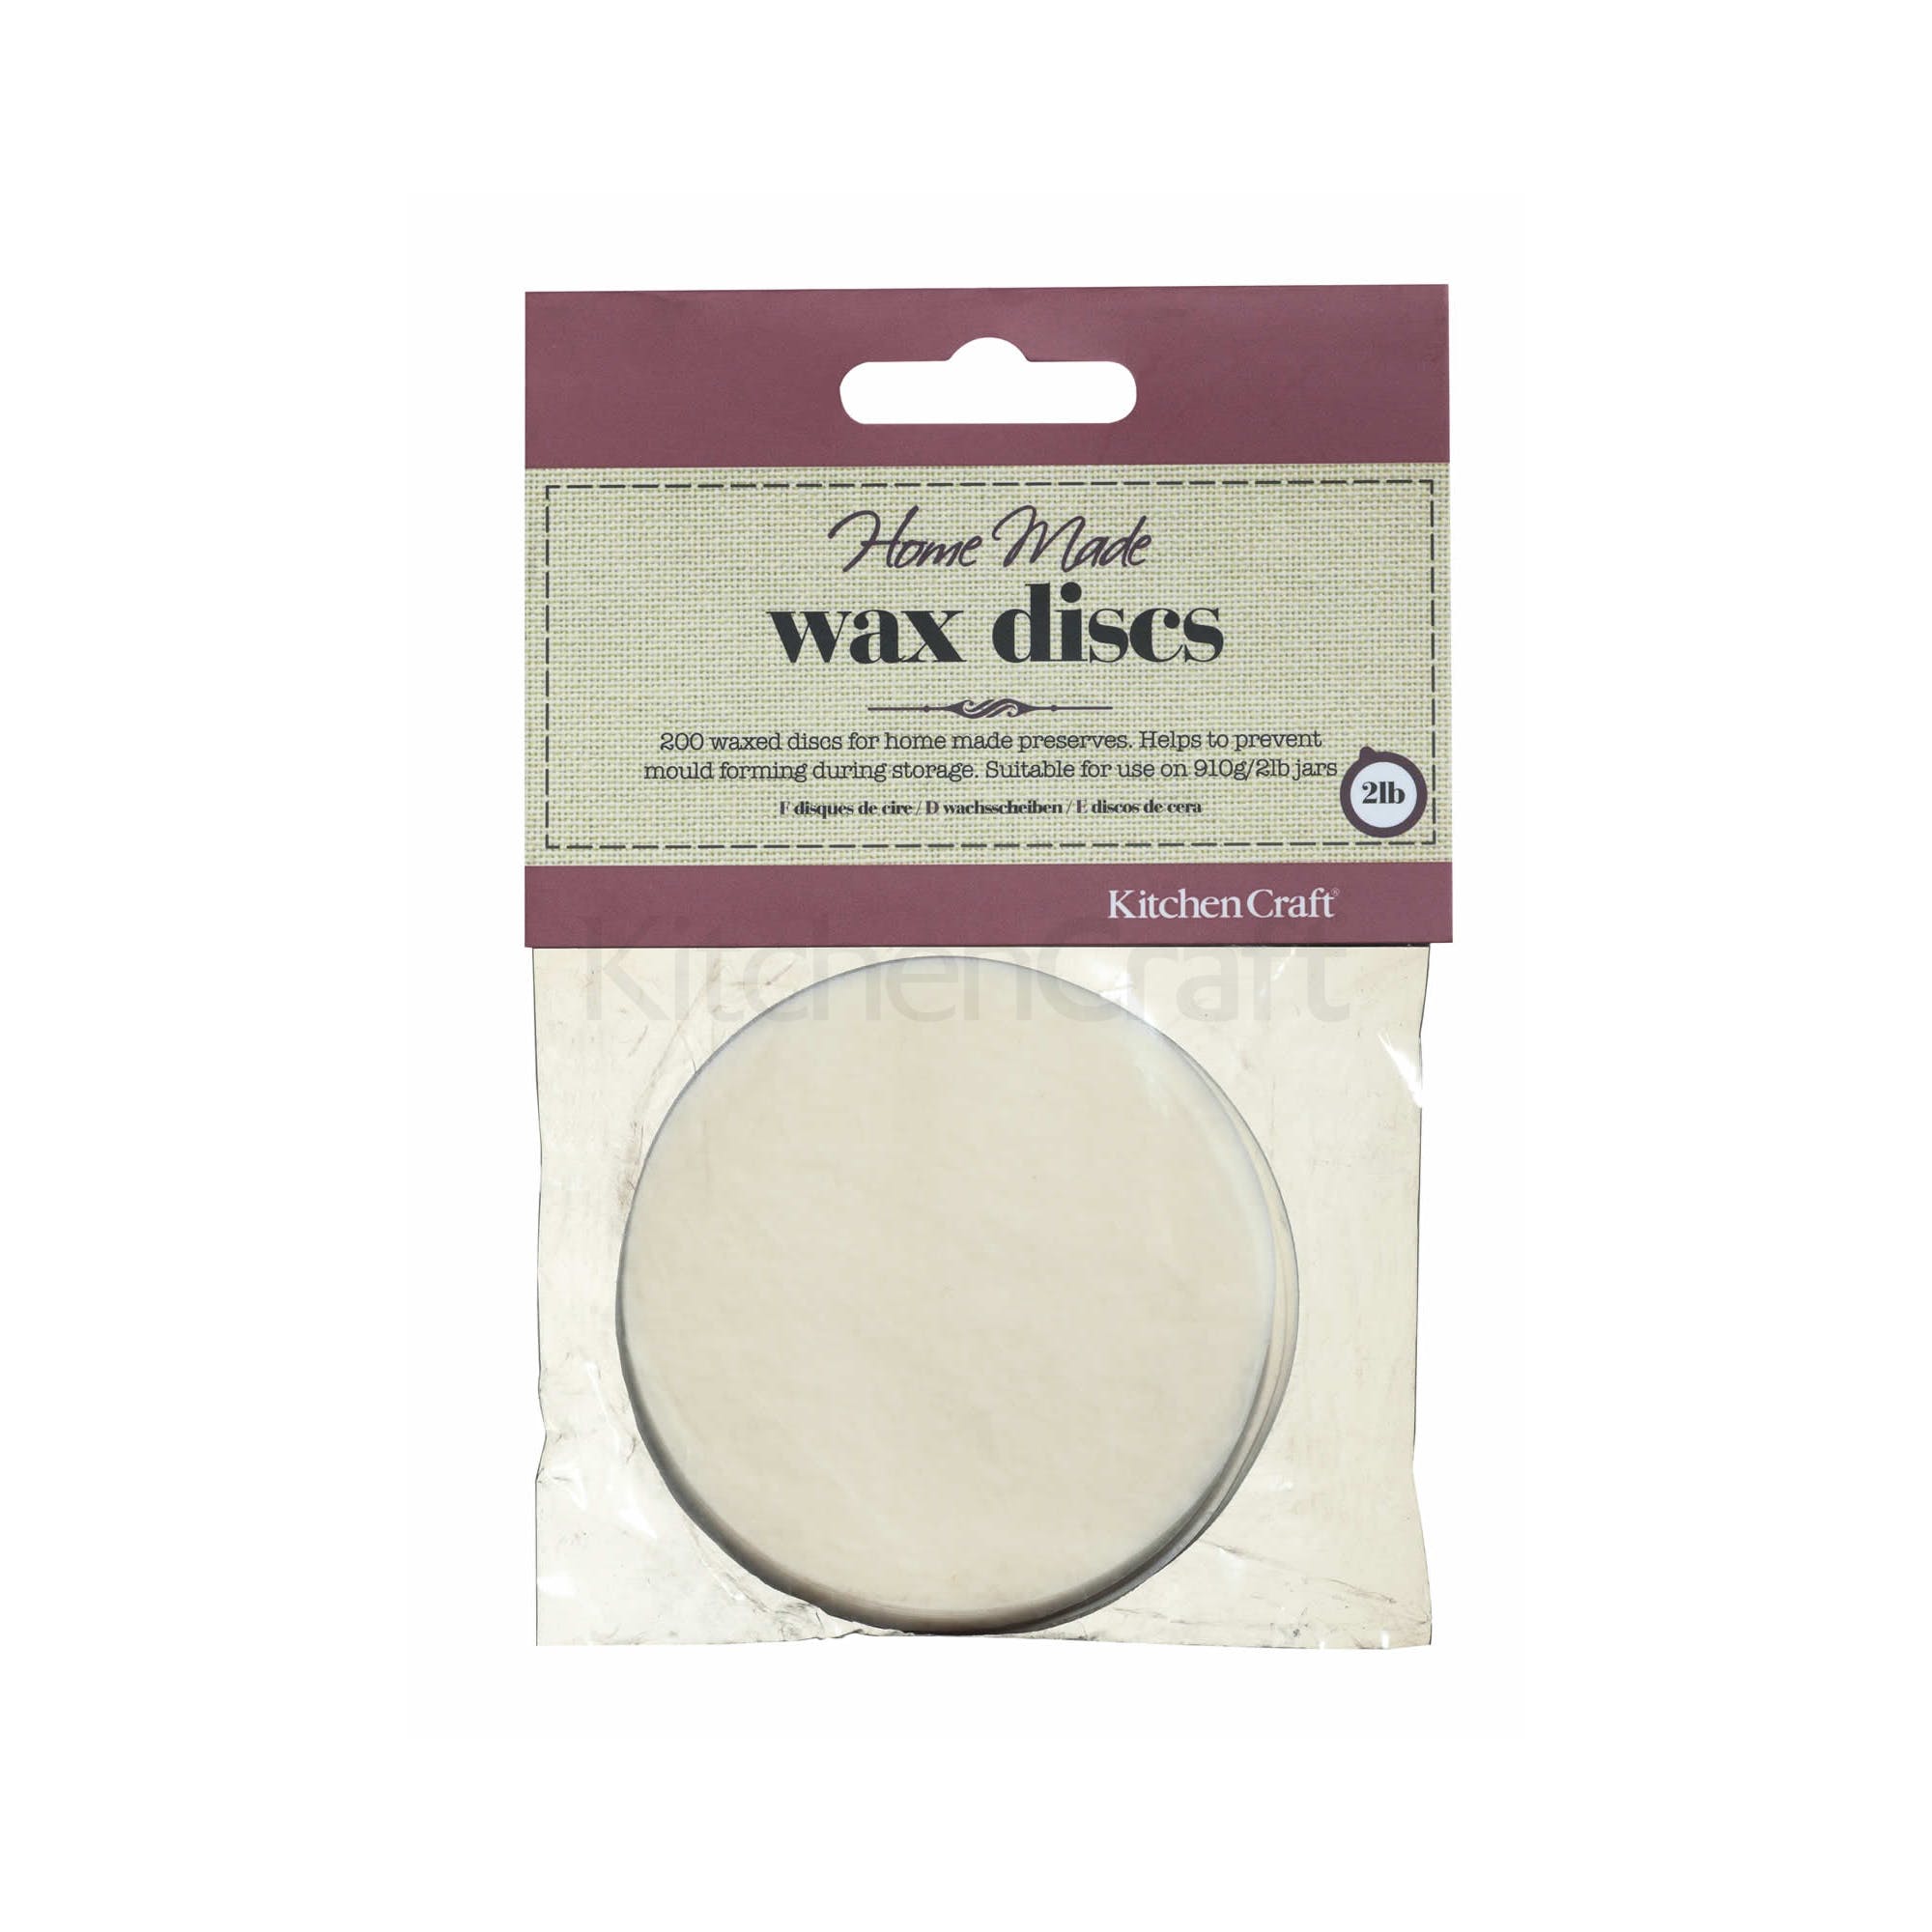 wax-discs-2